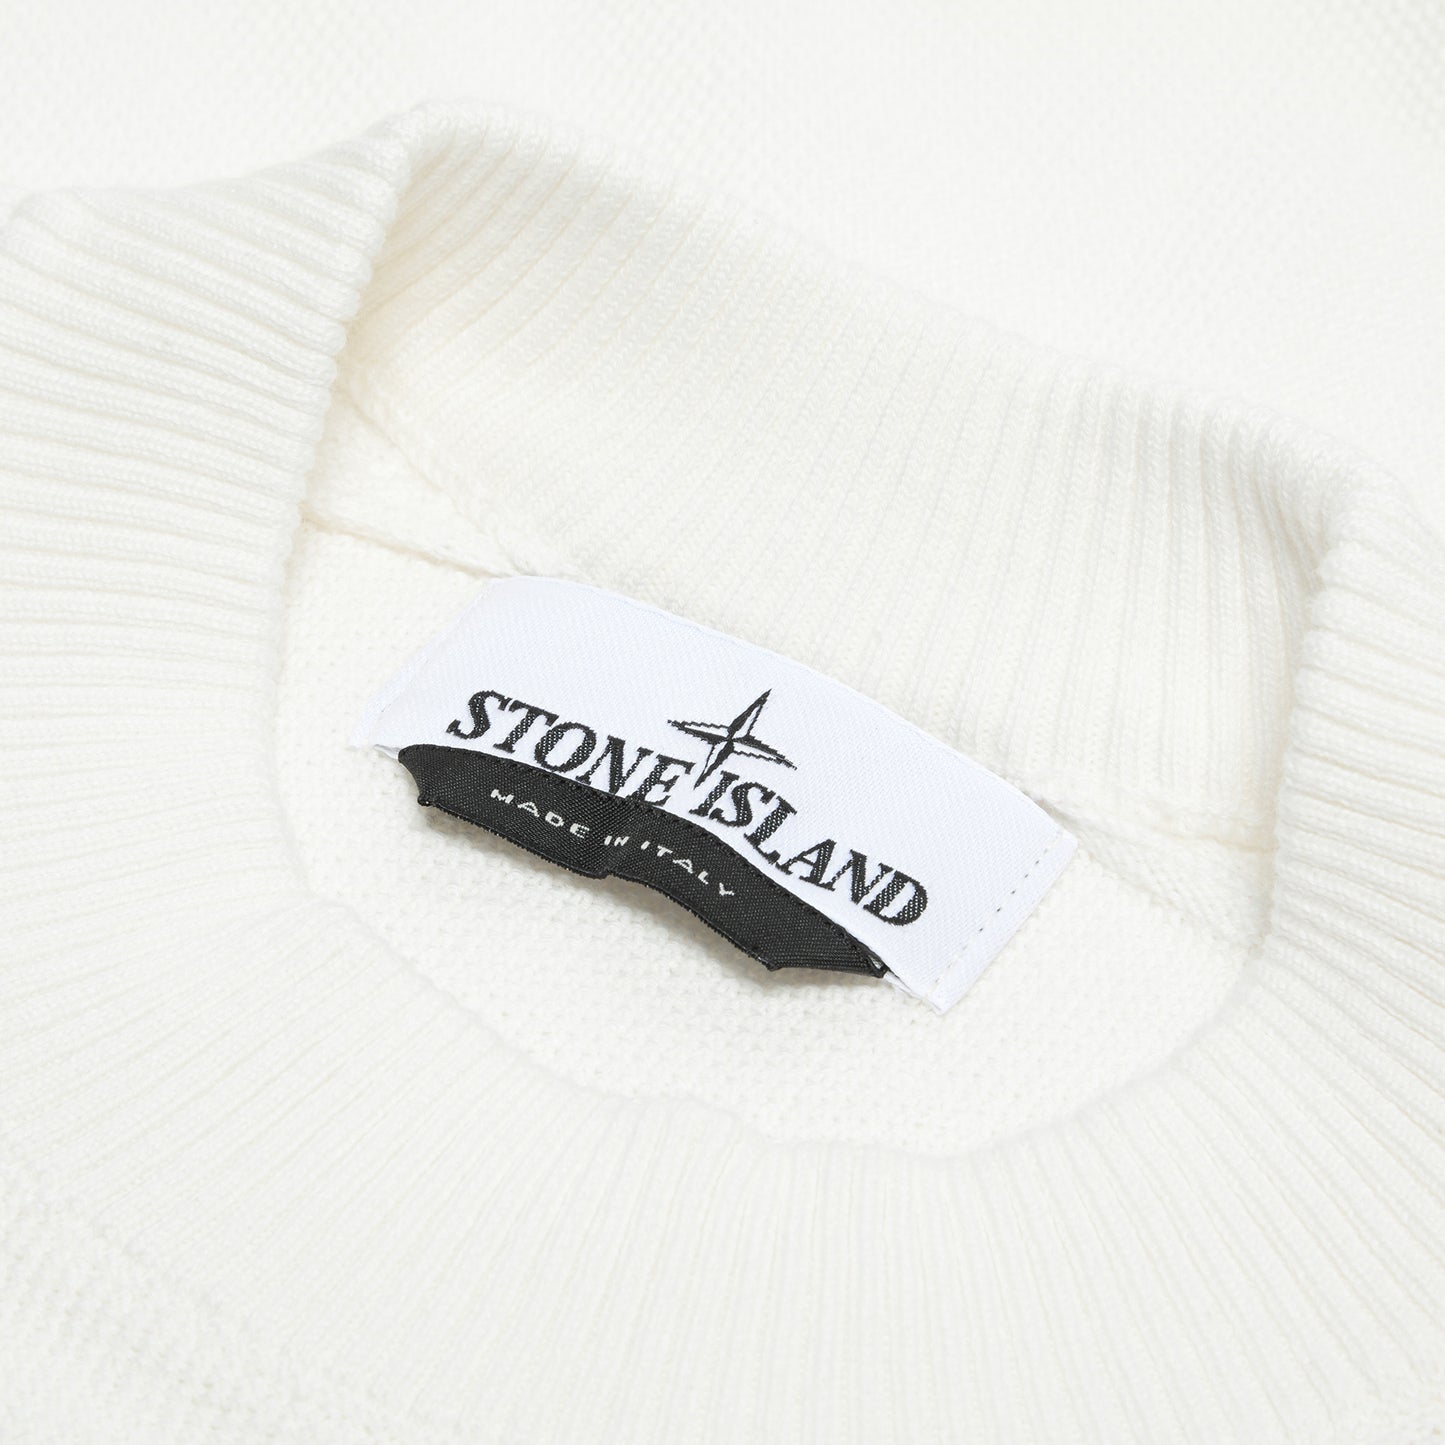 Stone Island Crew Neck Sweater (White)